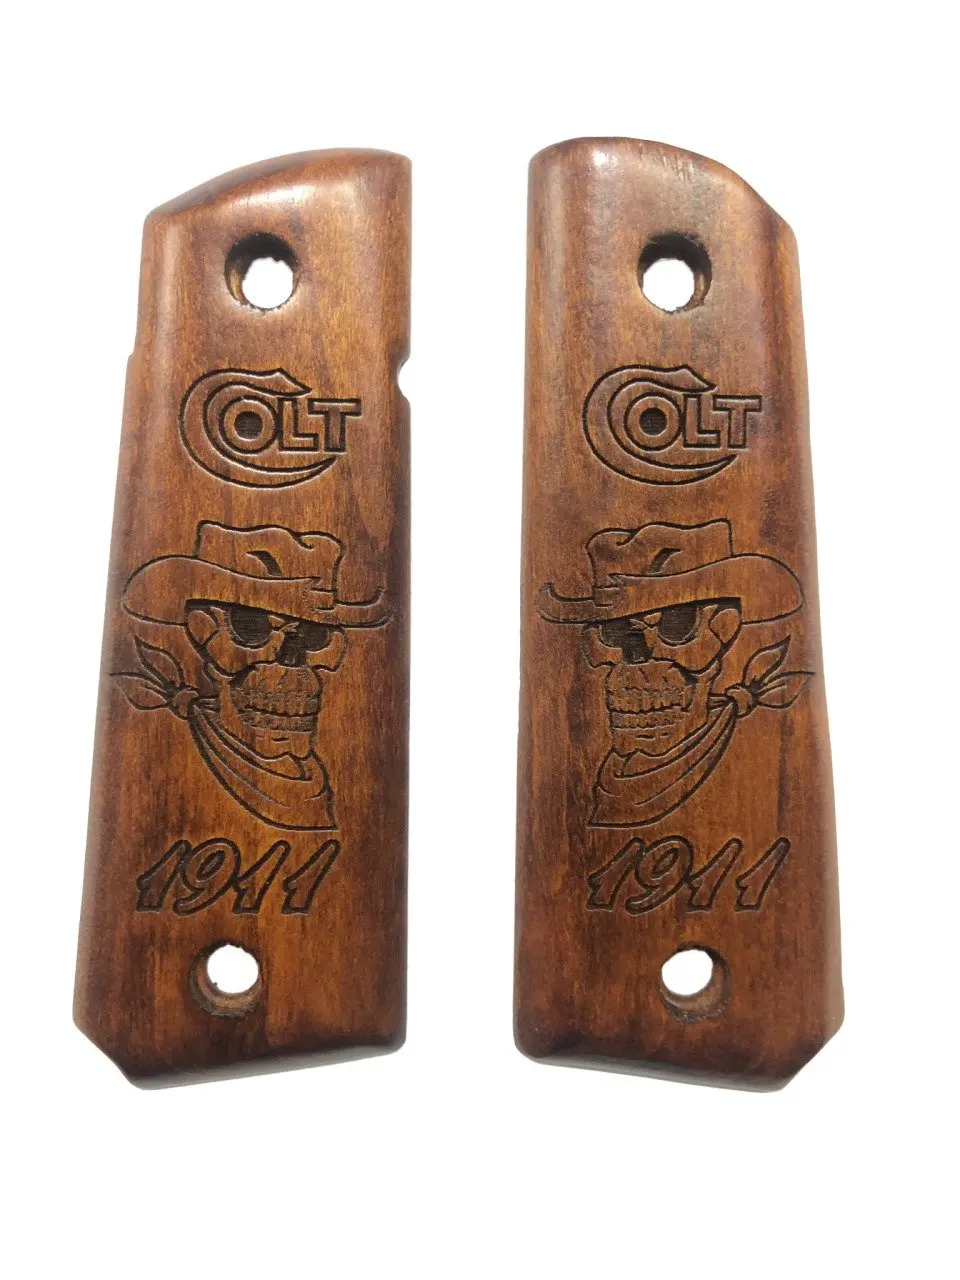 Colt print 1911-empuñaduras de incrustación de madera cortadas con láser personalizadas, accesorio para pistola, arma av